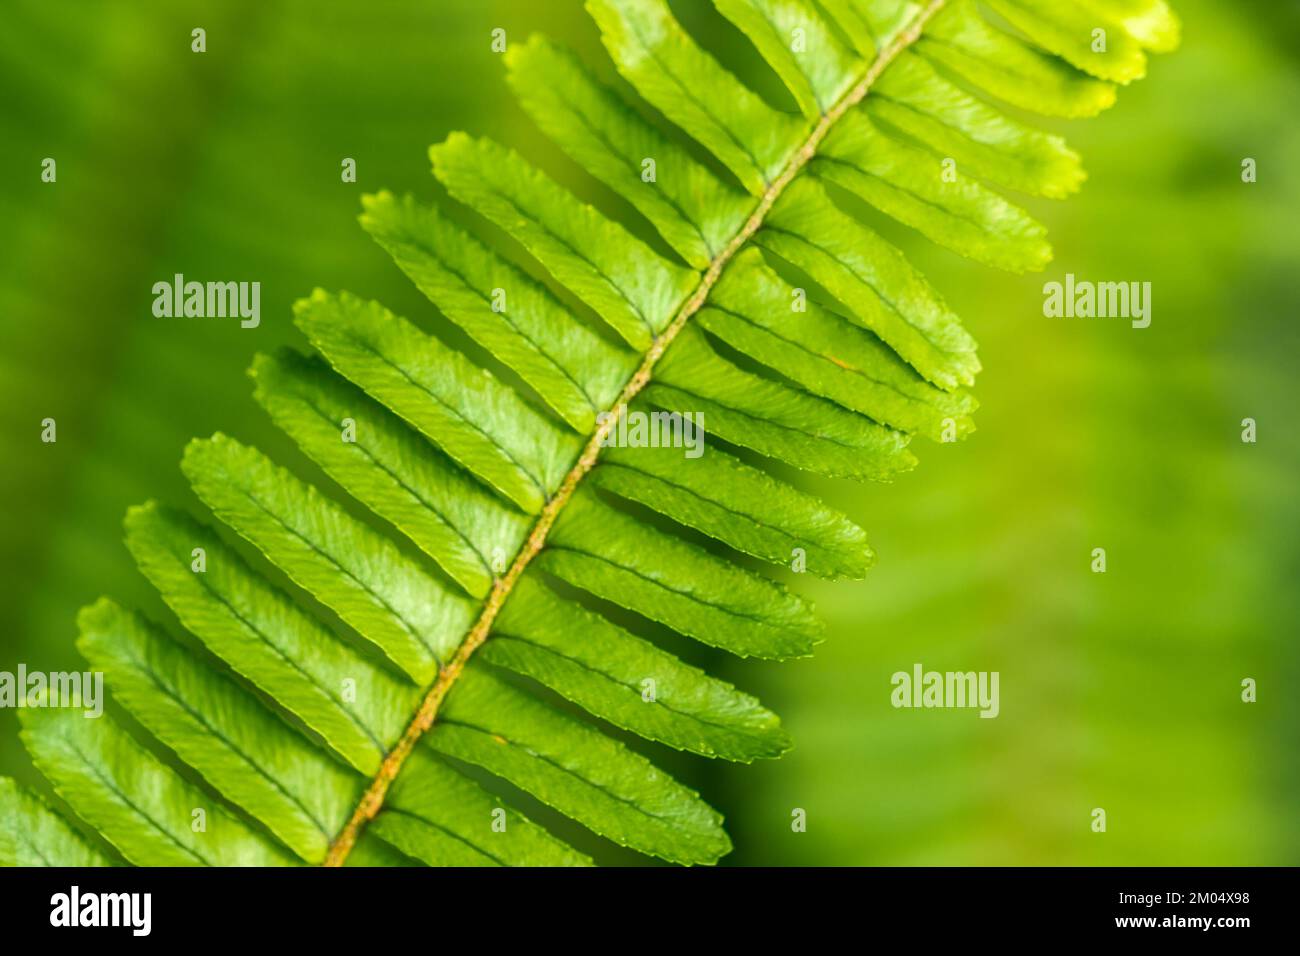 Detal and macro of fern leaves, green blurred background. Stock Photo